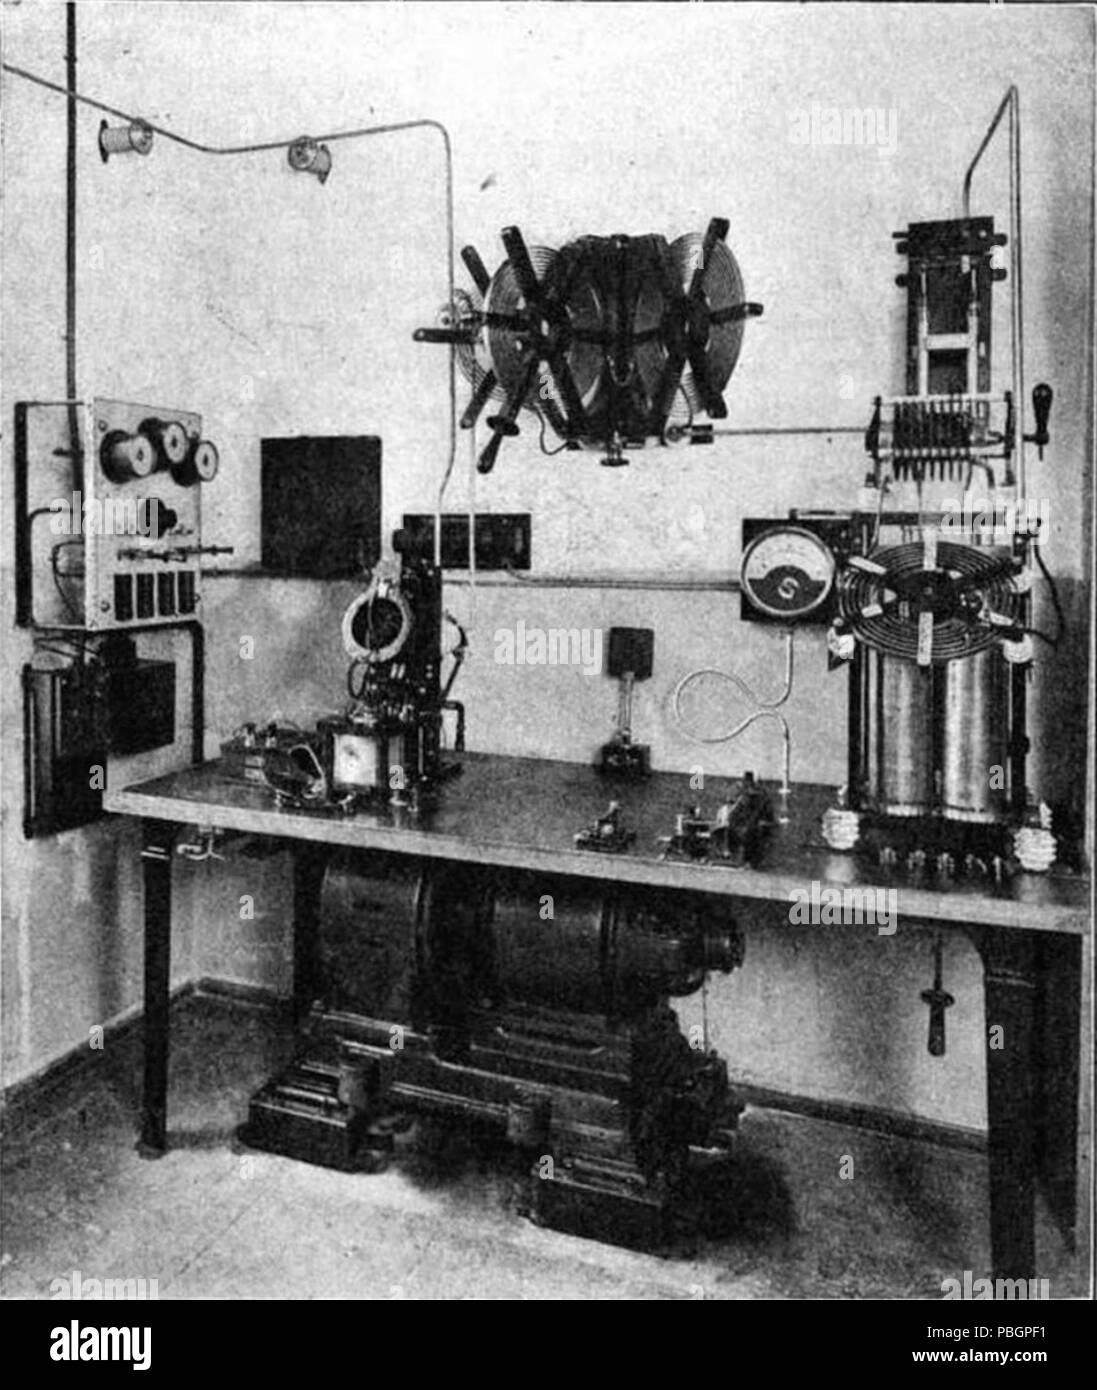 1602 Telefunken nave sala radio 1919 Foto stock - Alamy